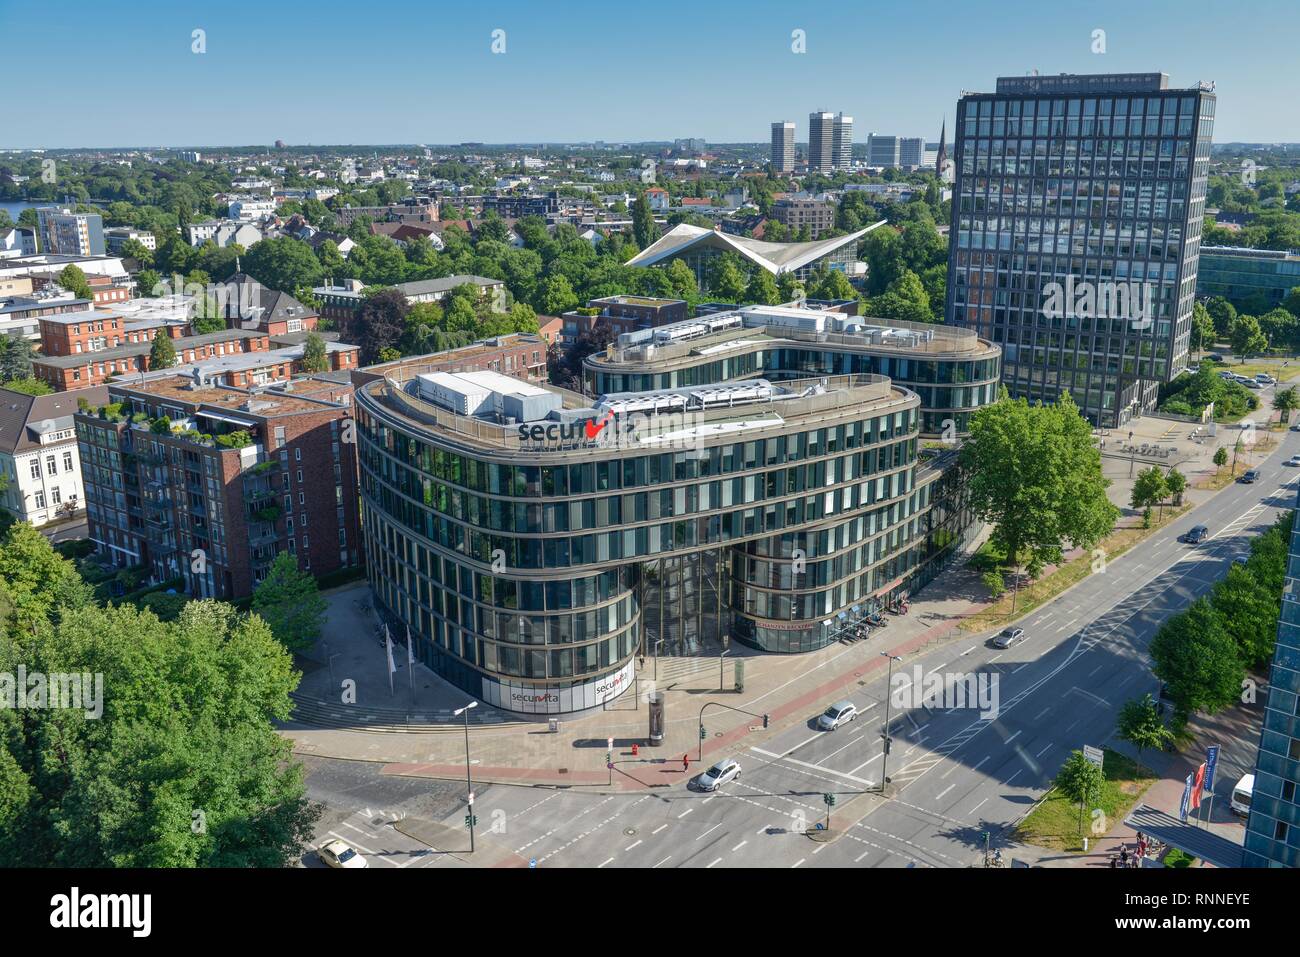 Vista di Securvita Krankenkasse edificio e la zona circostante, Lübeckertordamm, Amburgo, Germania Foto Stock